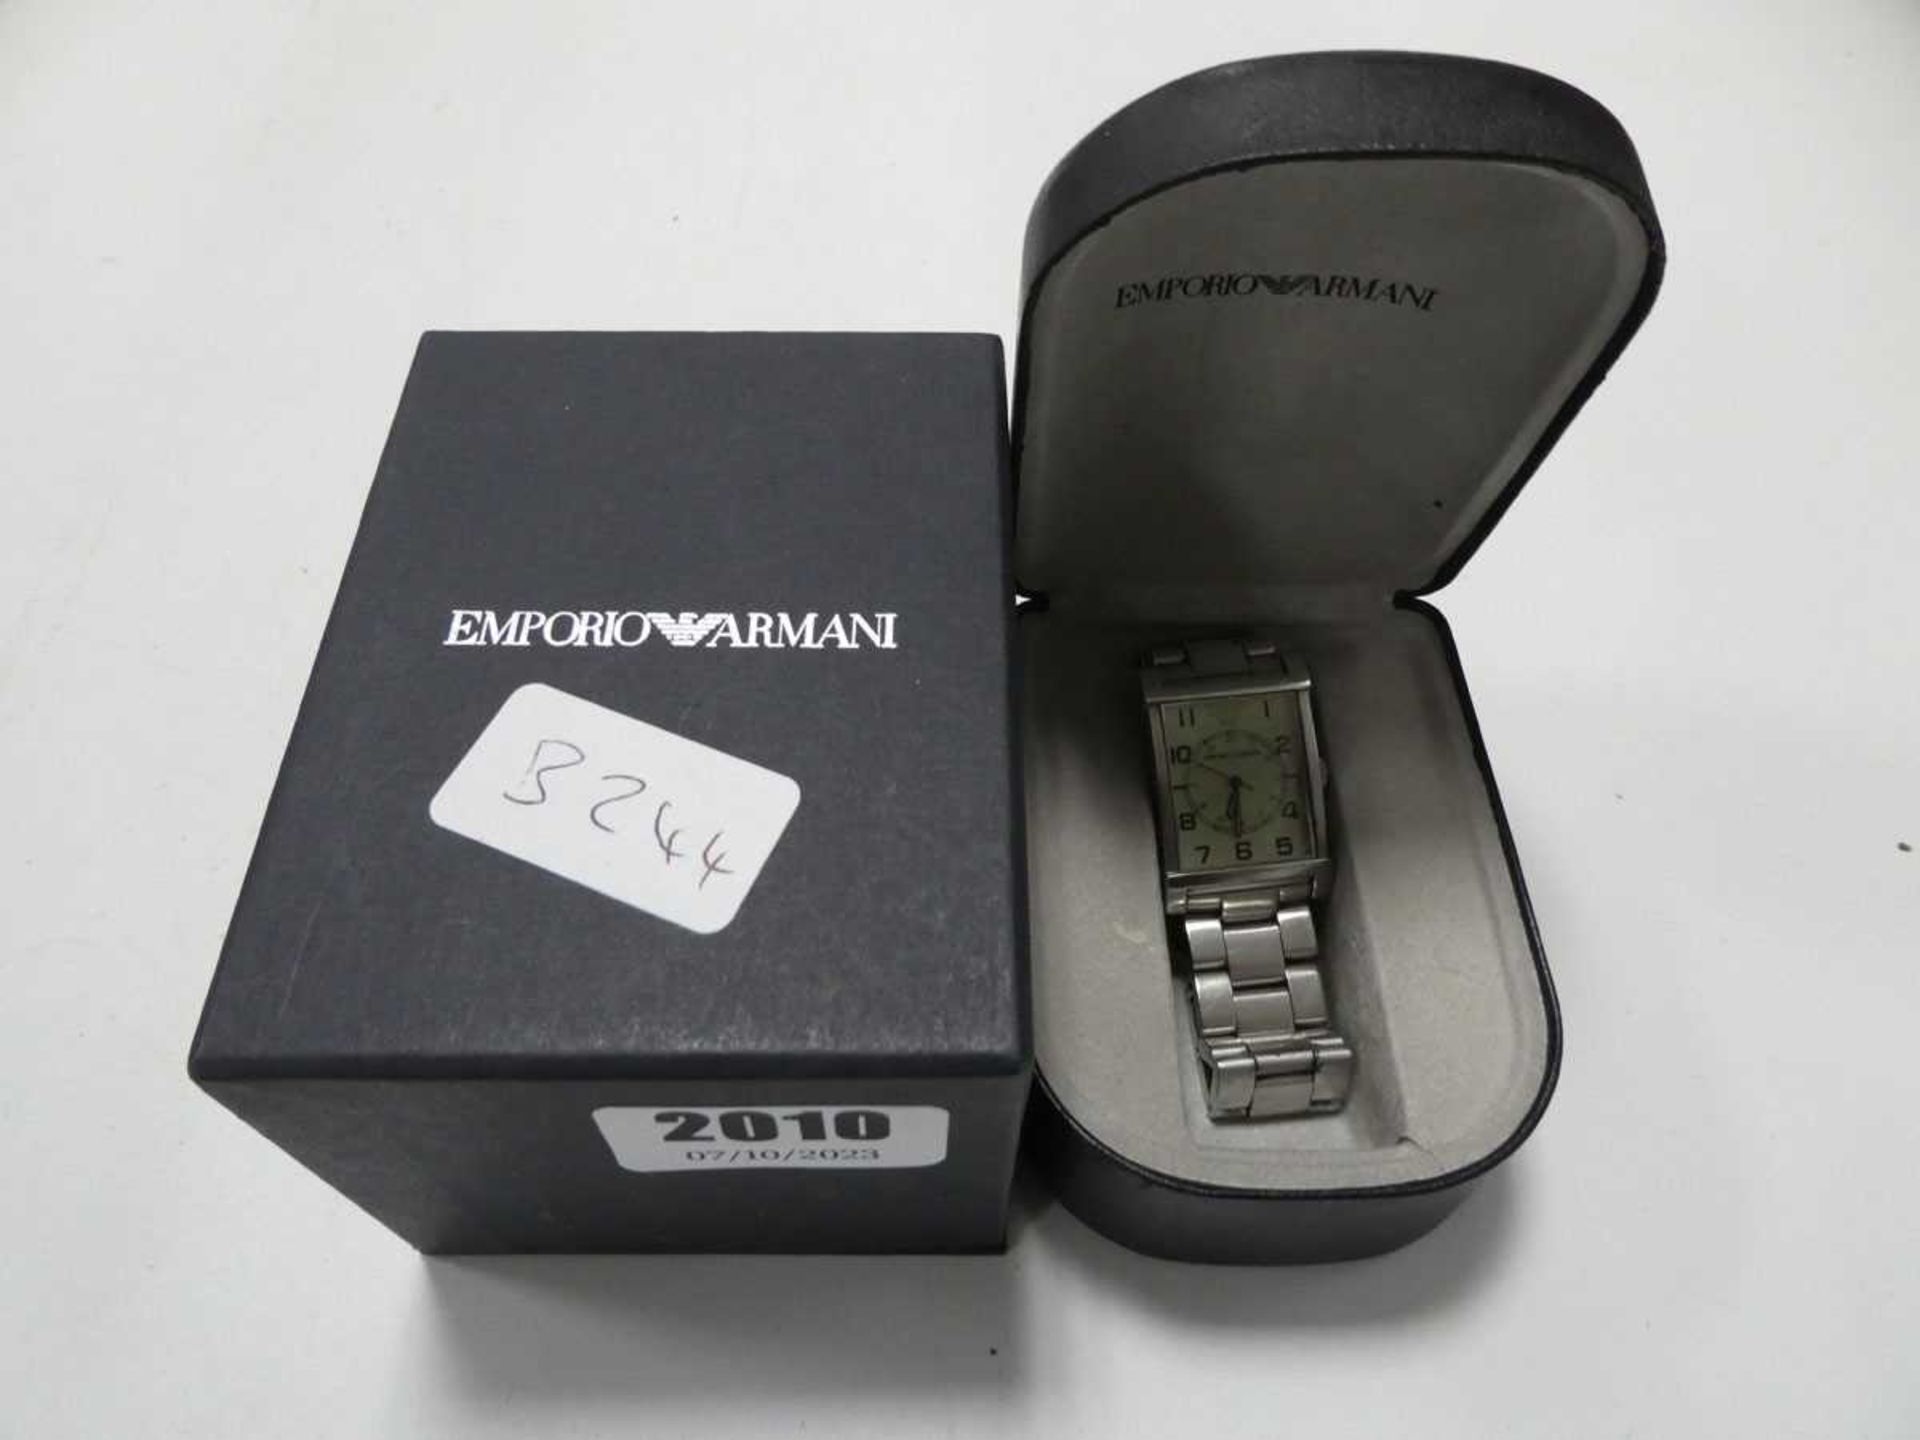 Boxed Emporio Armani watch